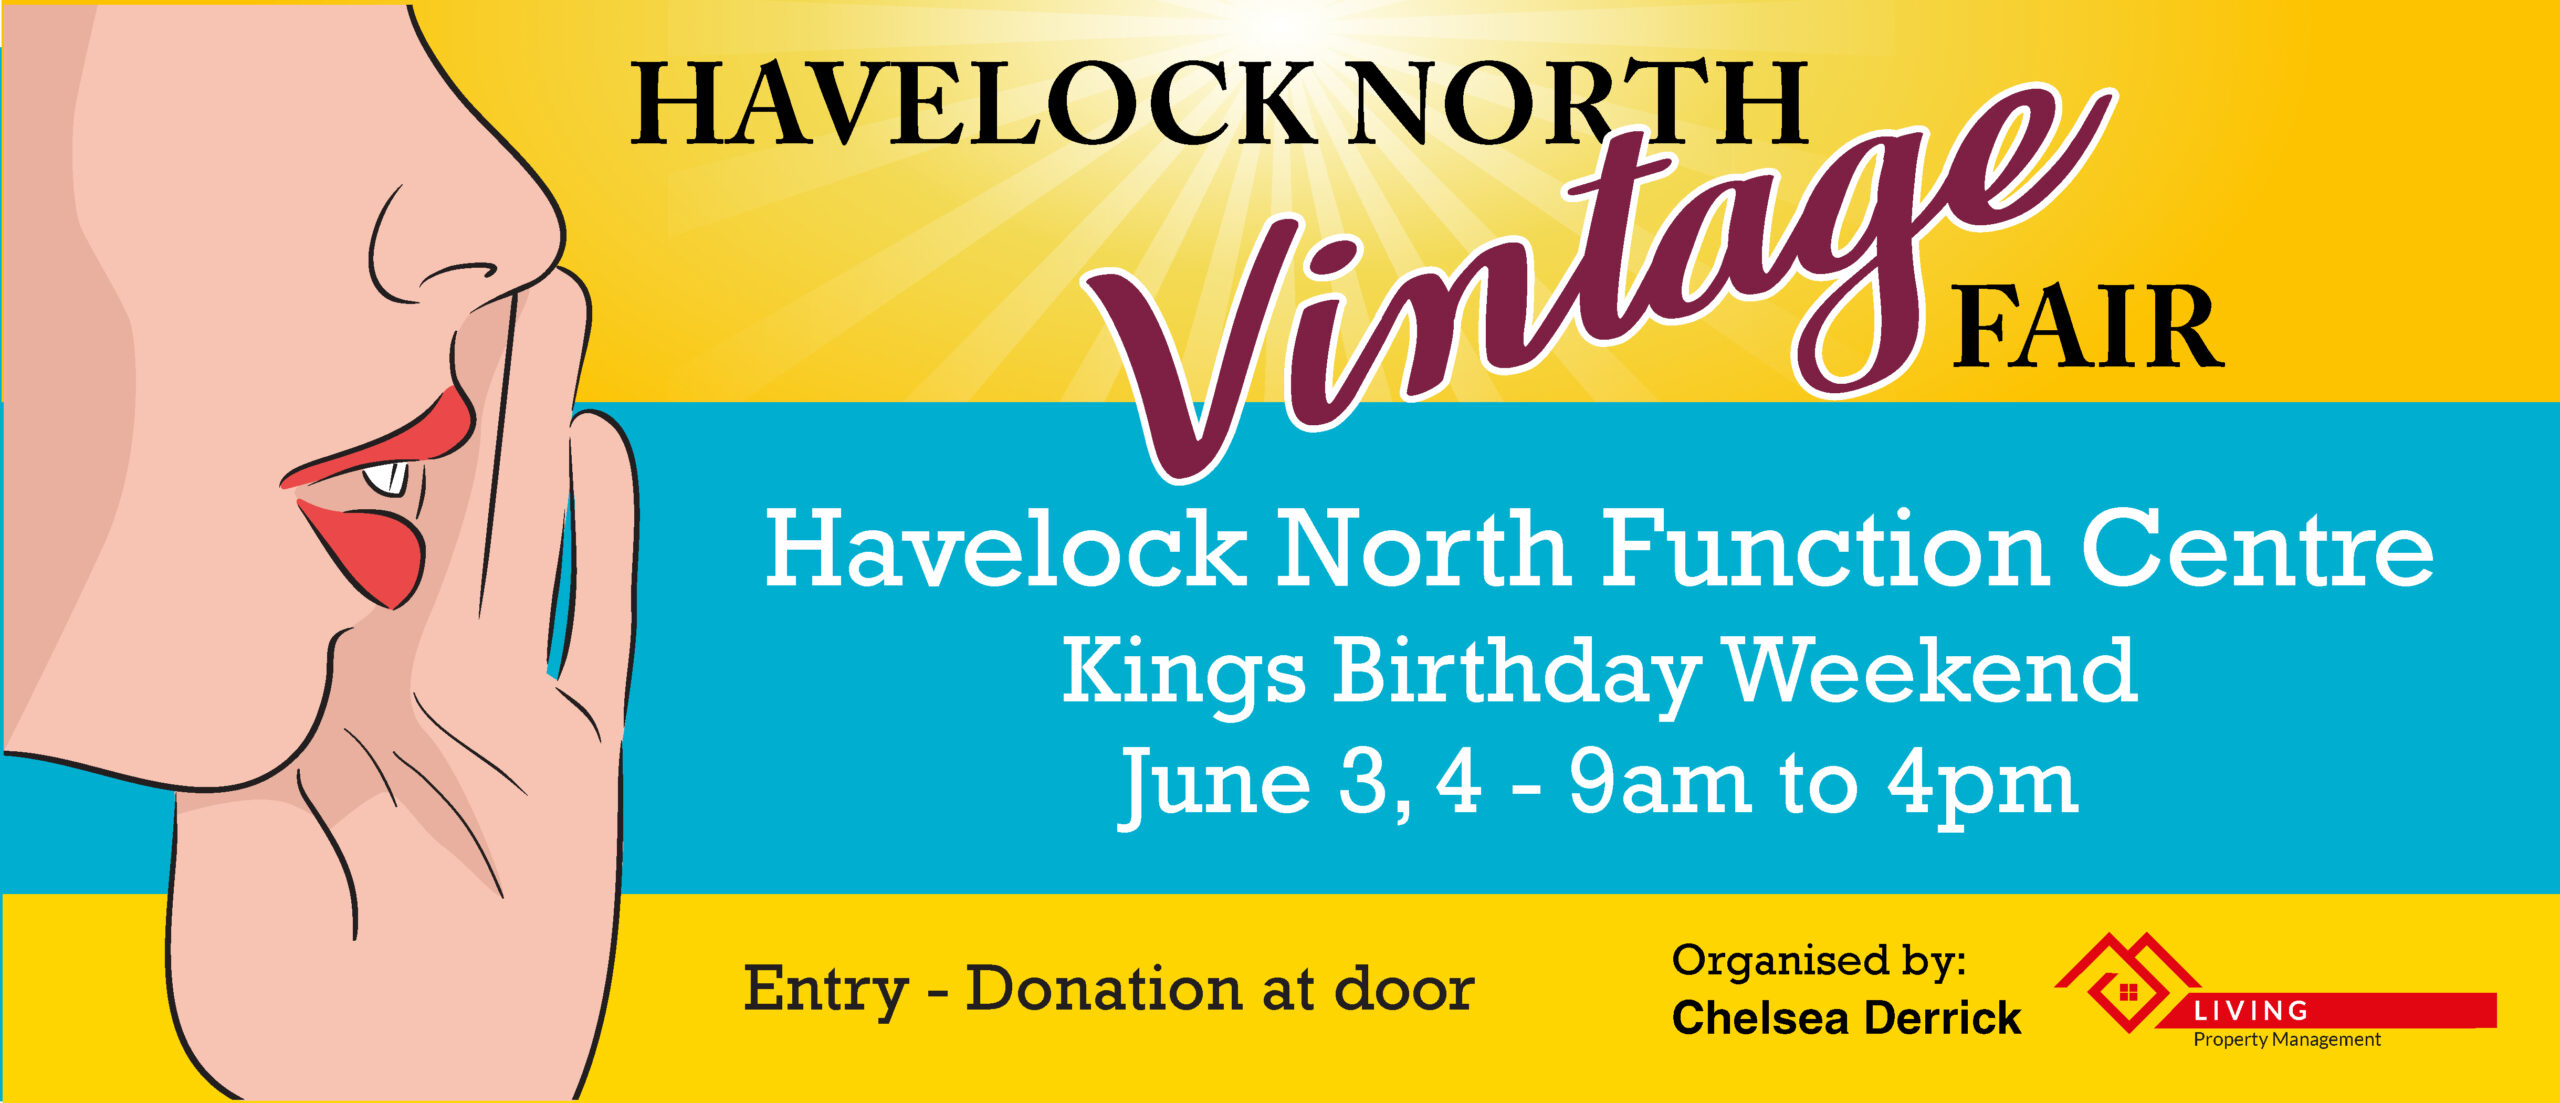 Havelock North Vintage Fair